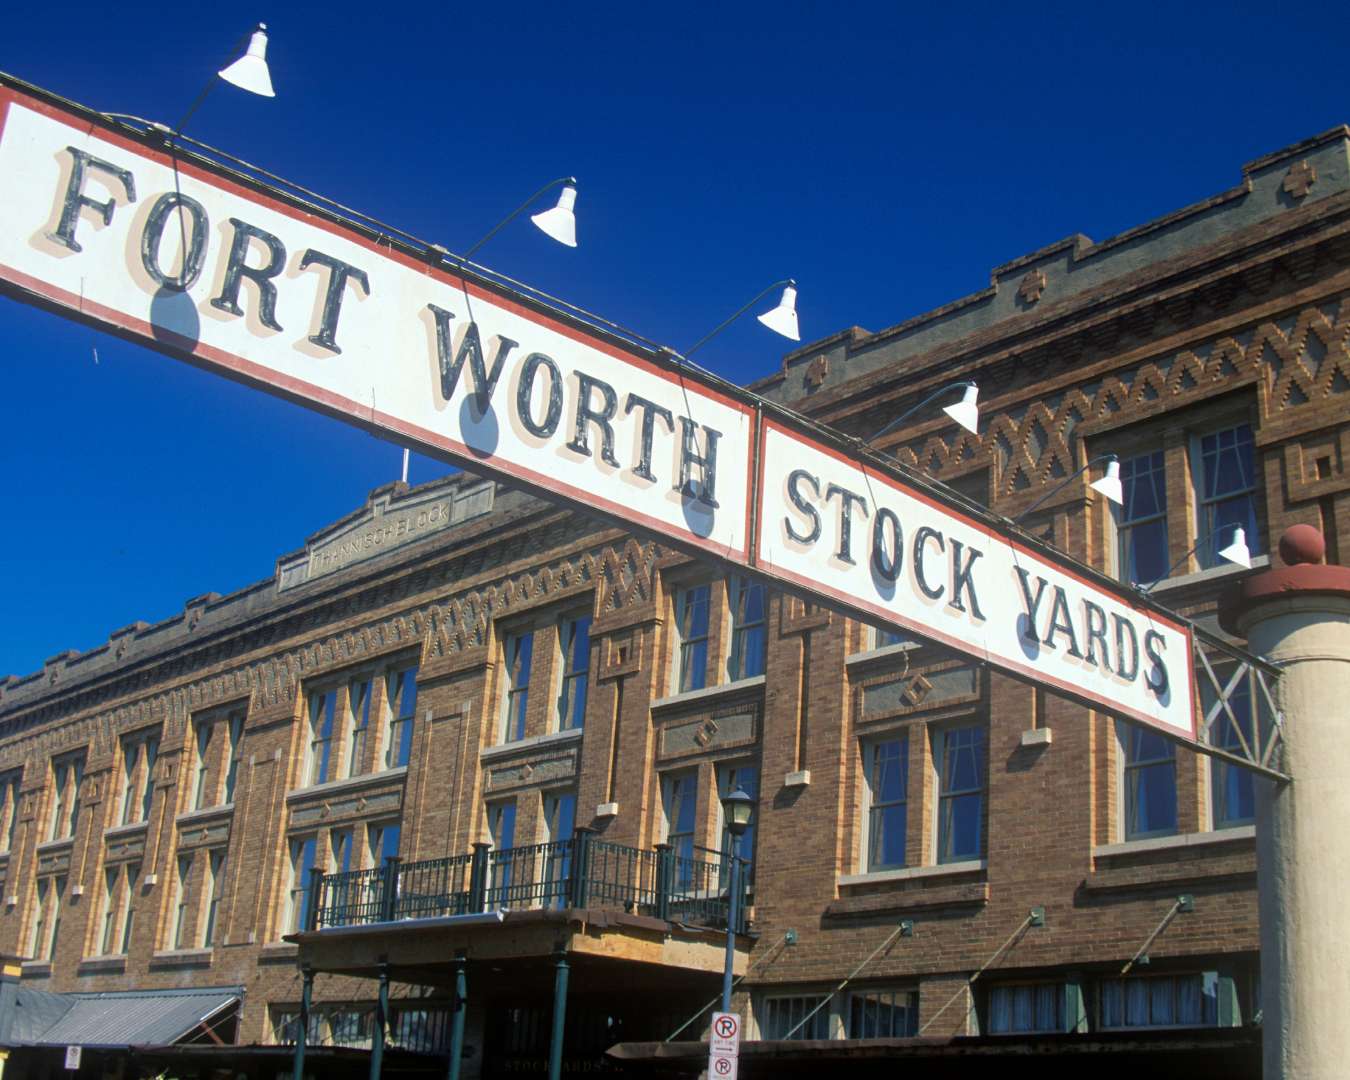 Fort Worth Stockyards sign